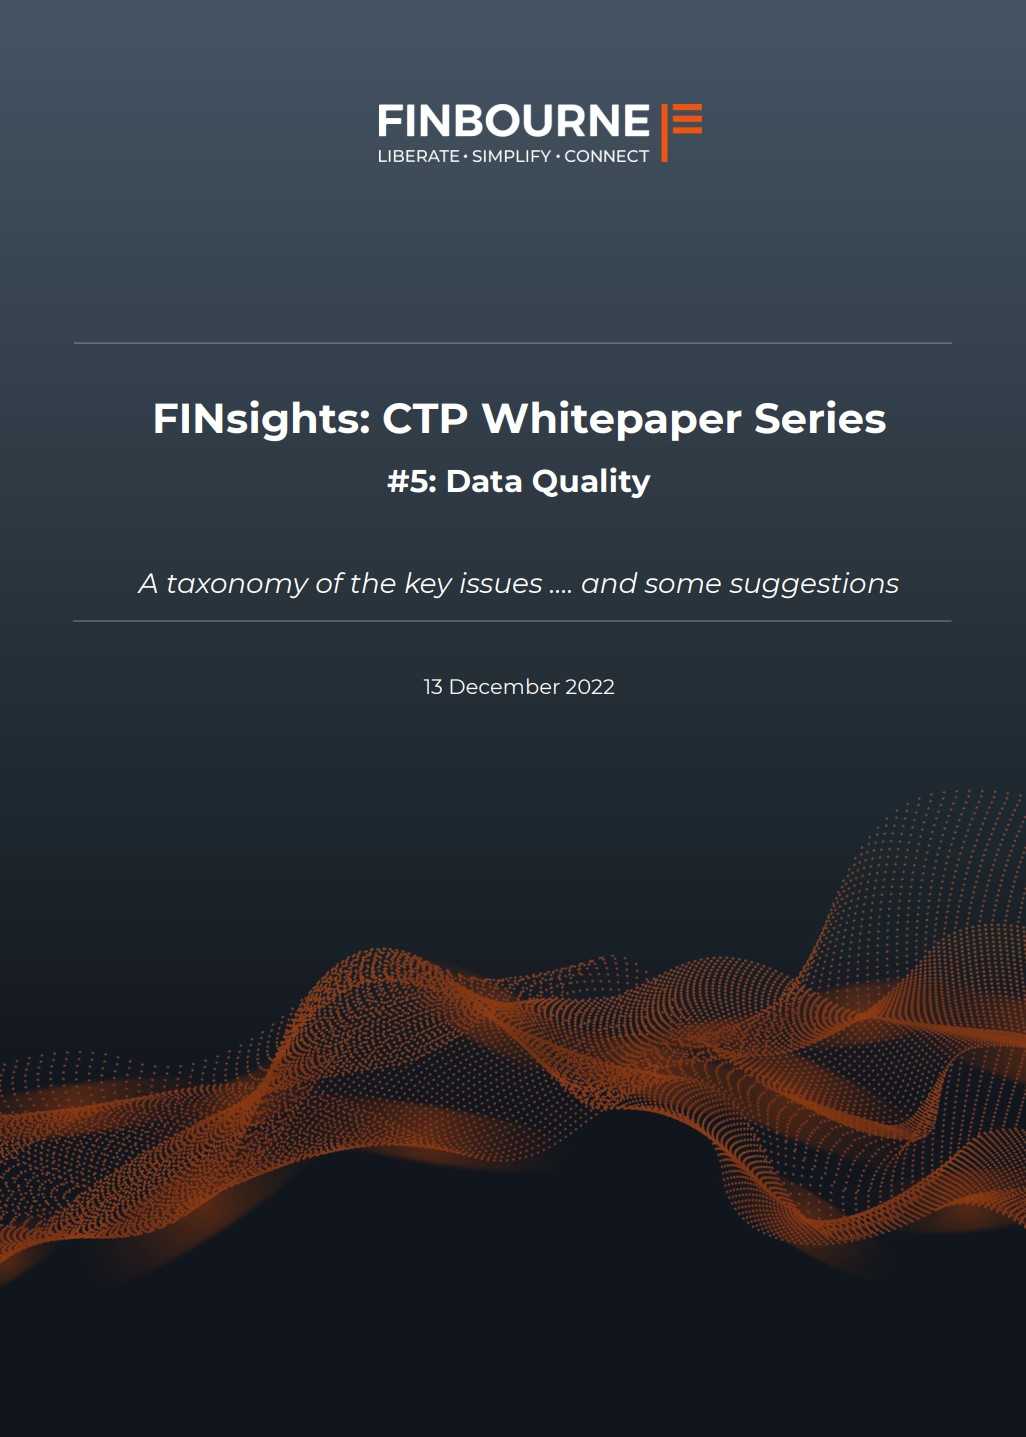 CTP Whitepaper Series: #5 Data Quality